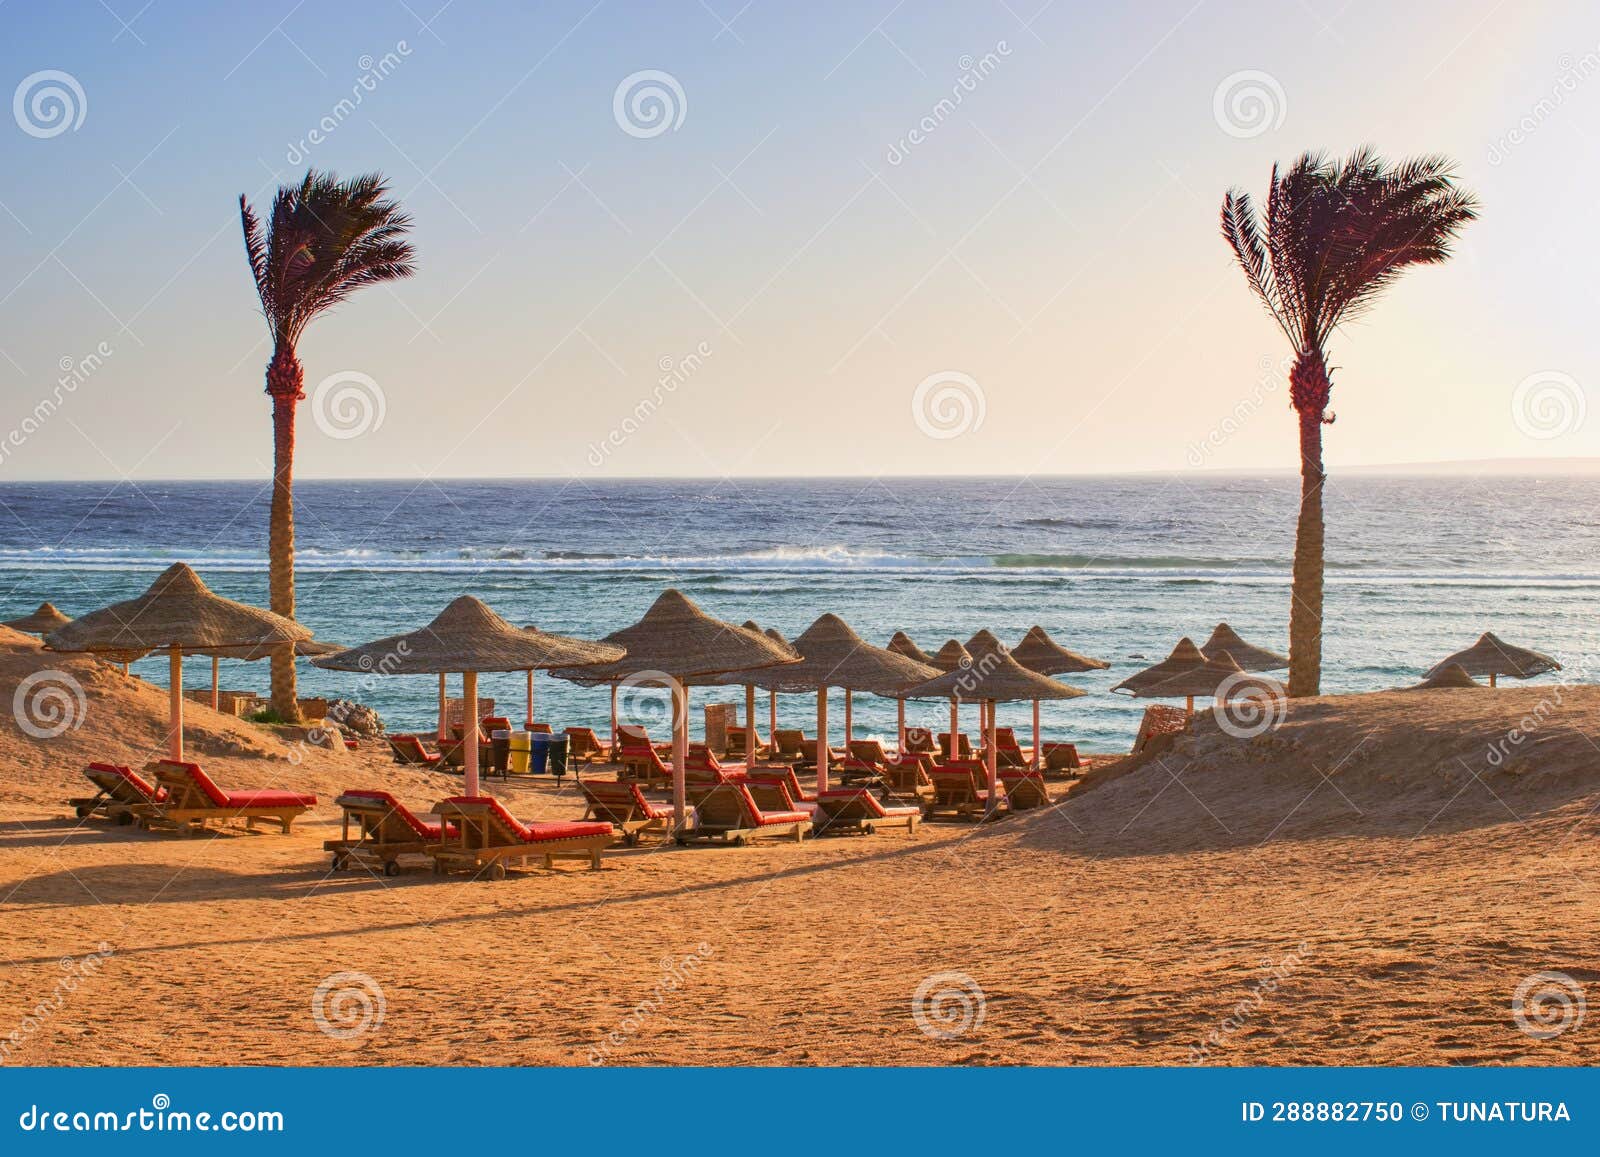 idylic beach with palms and sun umbrelas, red sea, egypt